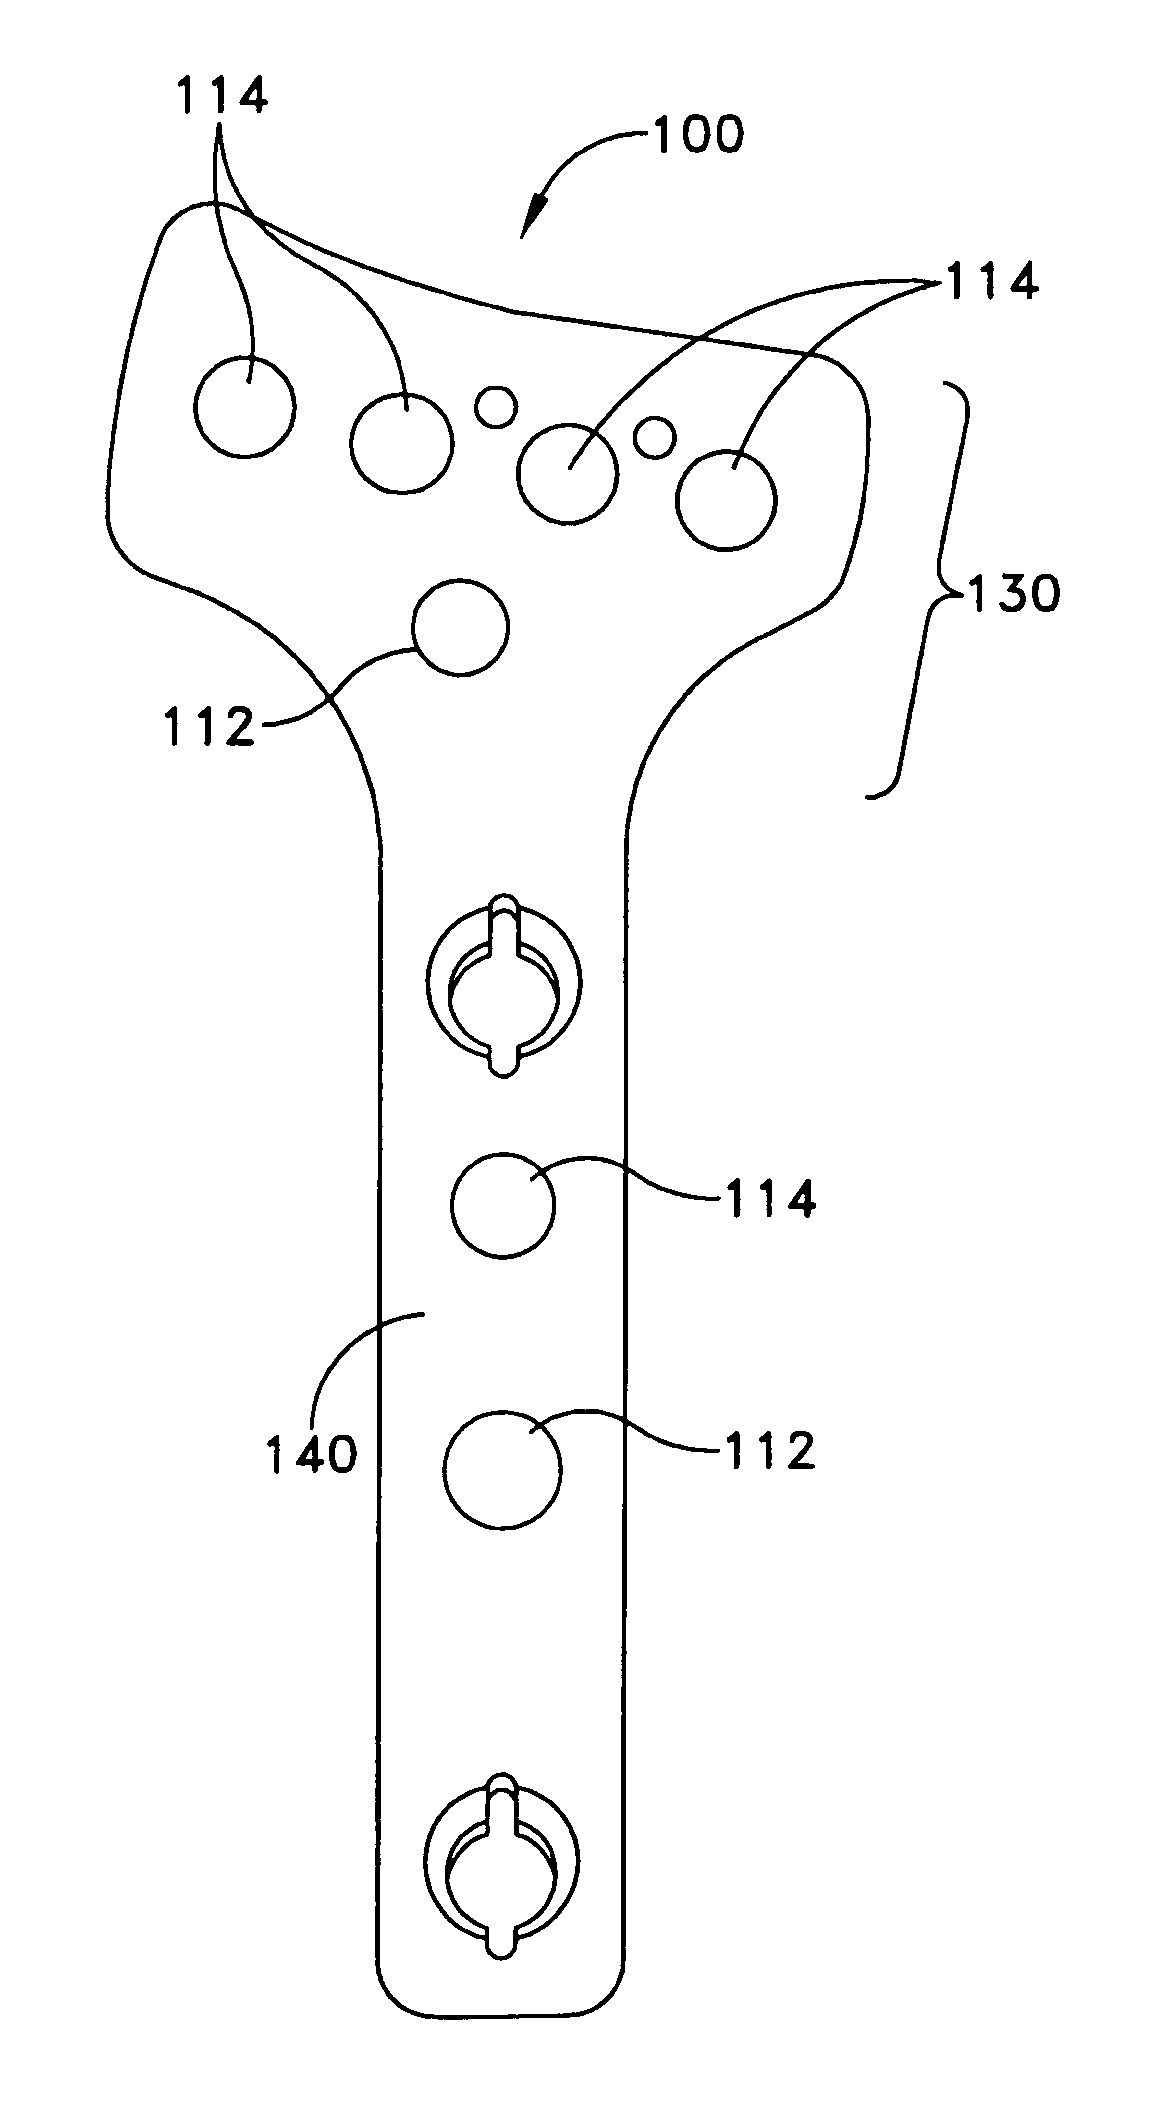 Distal radius bone plating system with locking and non-locking screws